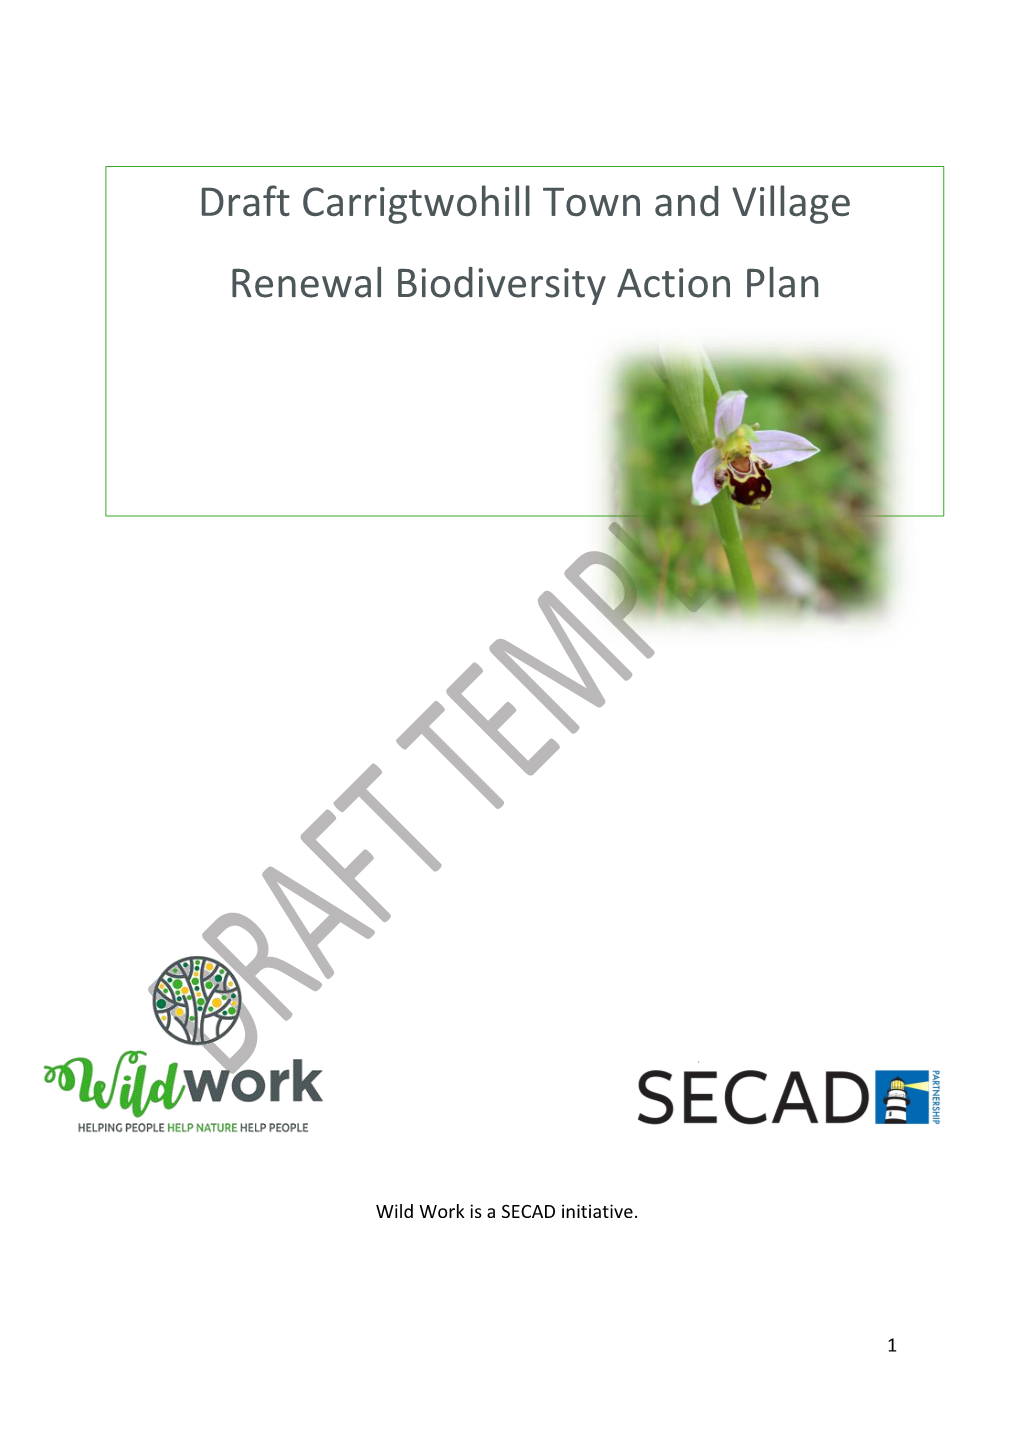 Draft Carrigtwohill Town and Village Renewal Biodiversity Action Plan